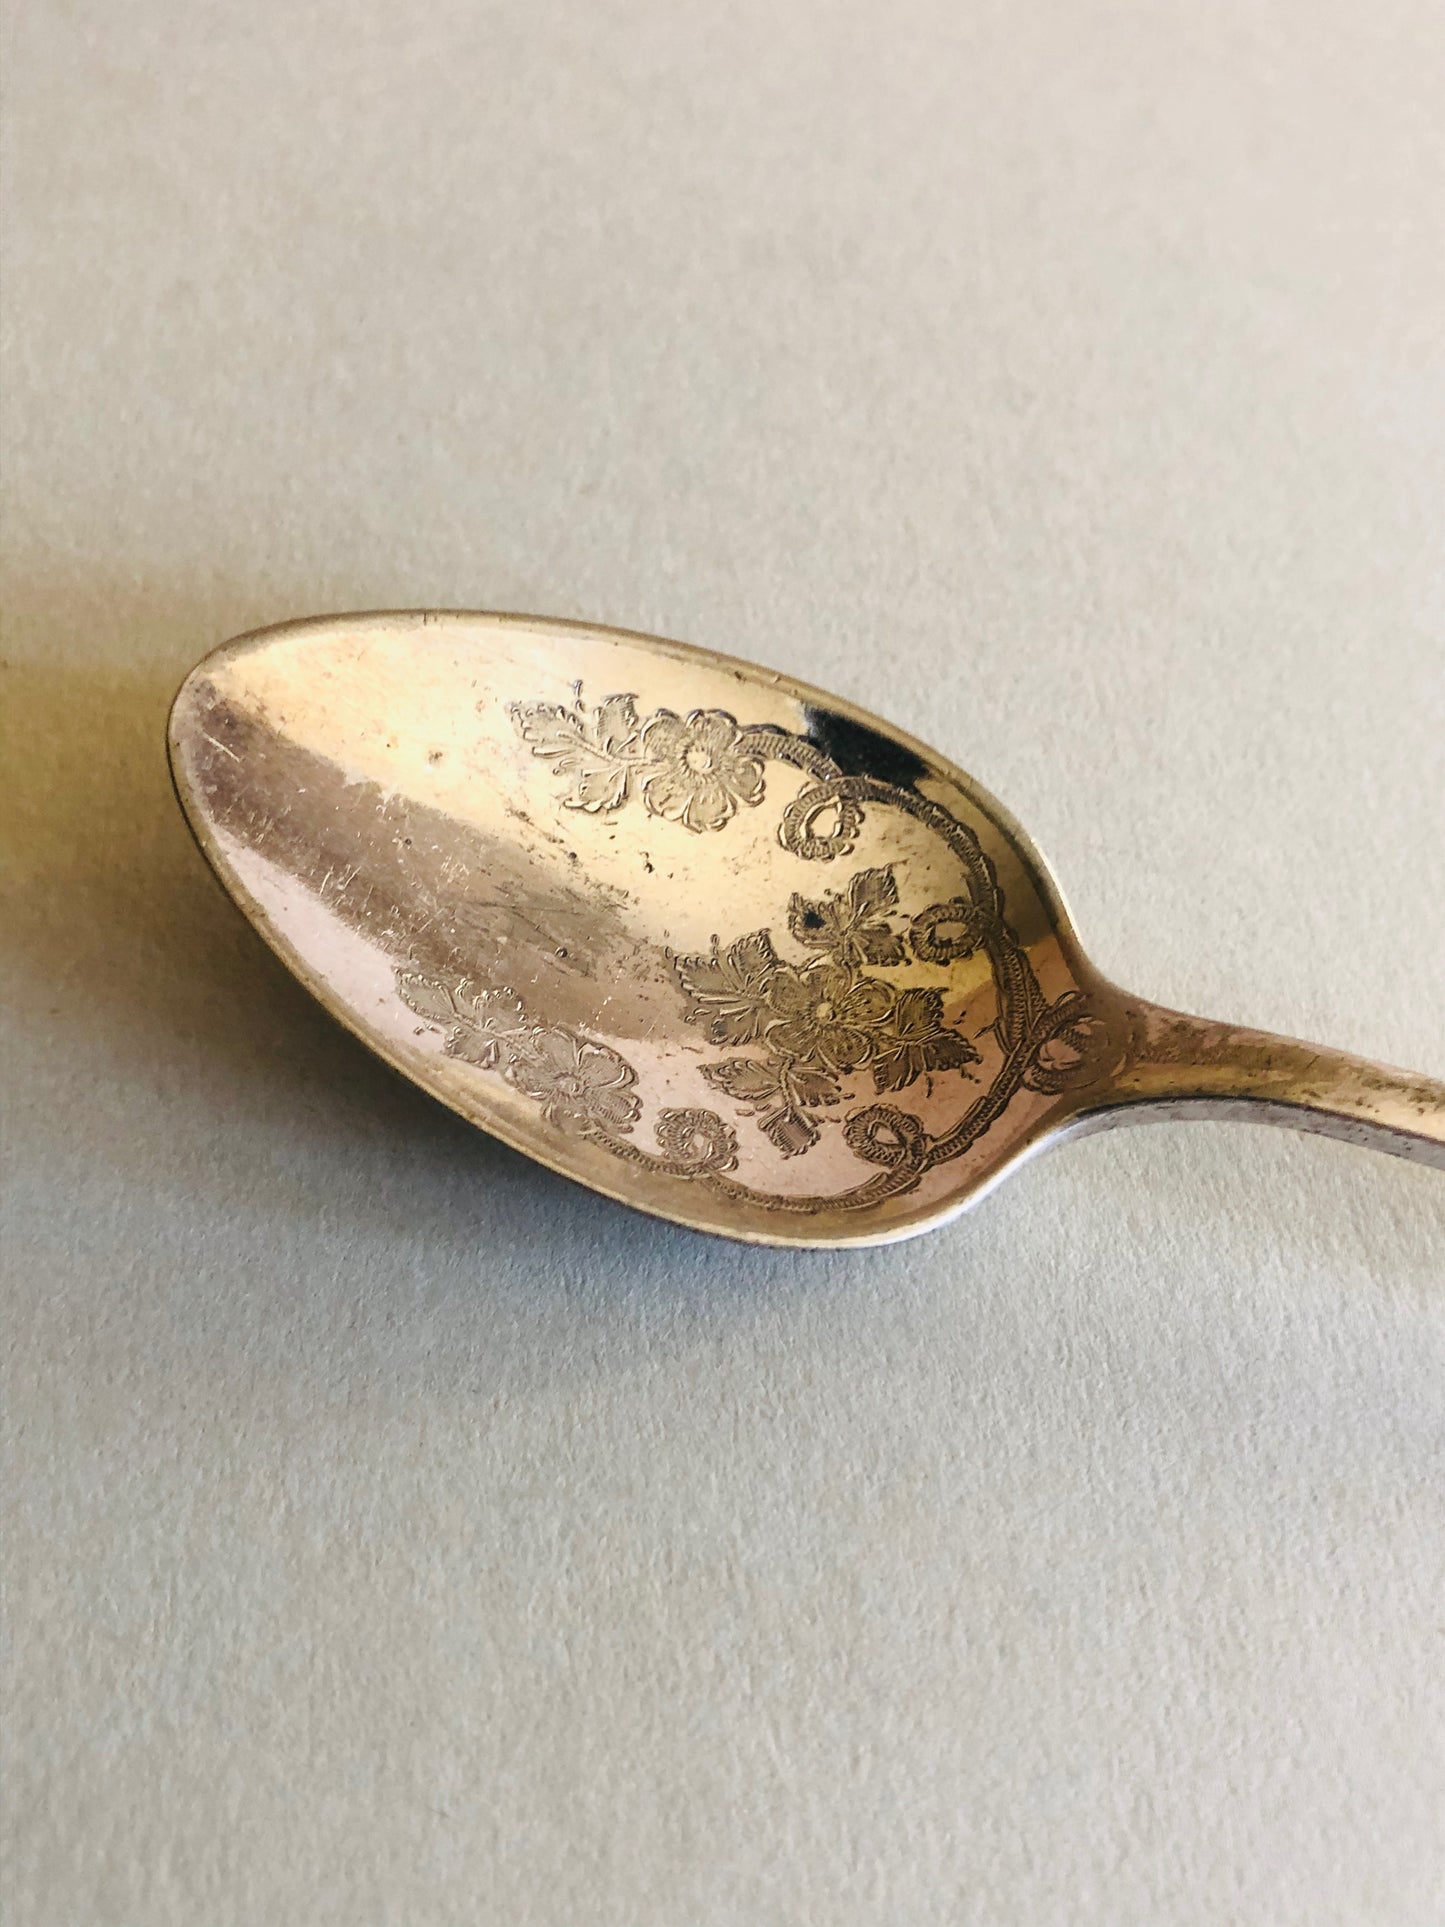 The Headhunter Carolyn - Antique Engraved Dessert / Soup Spoon